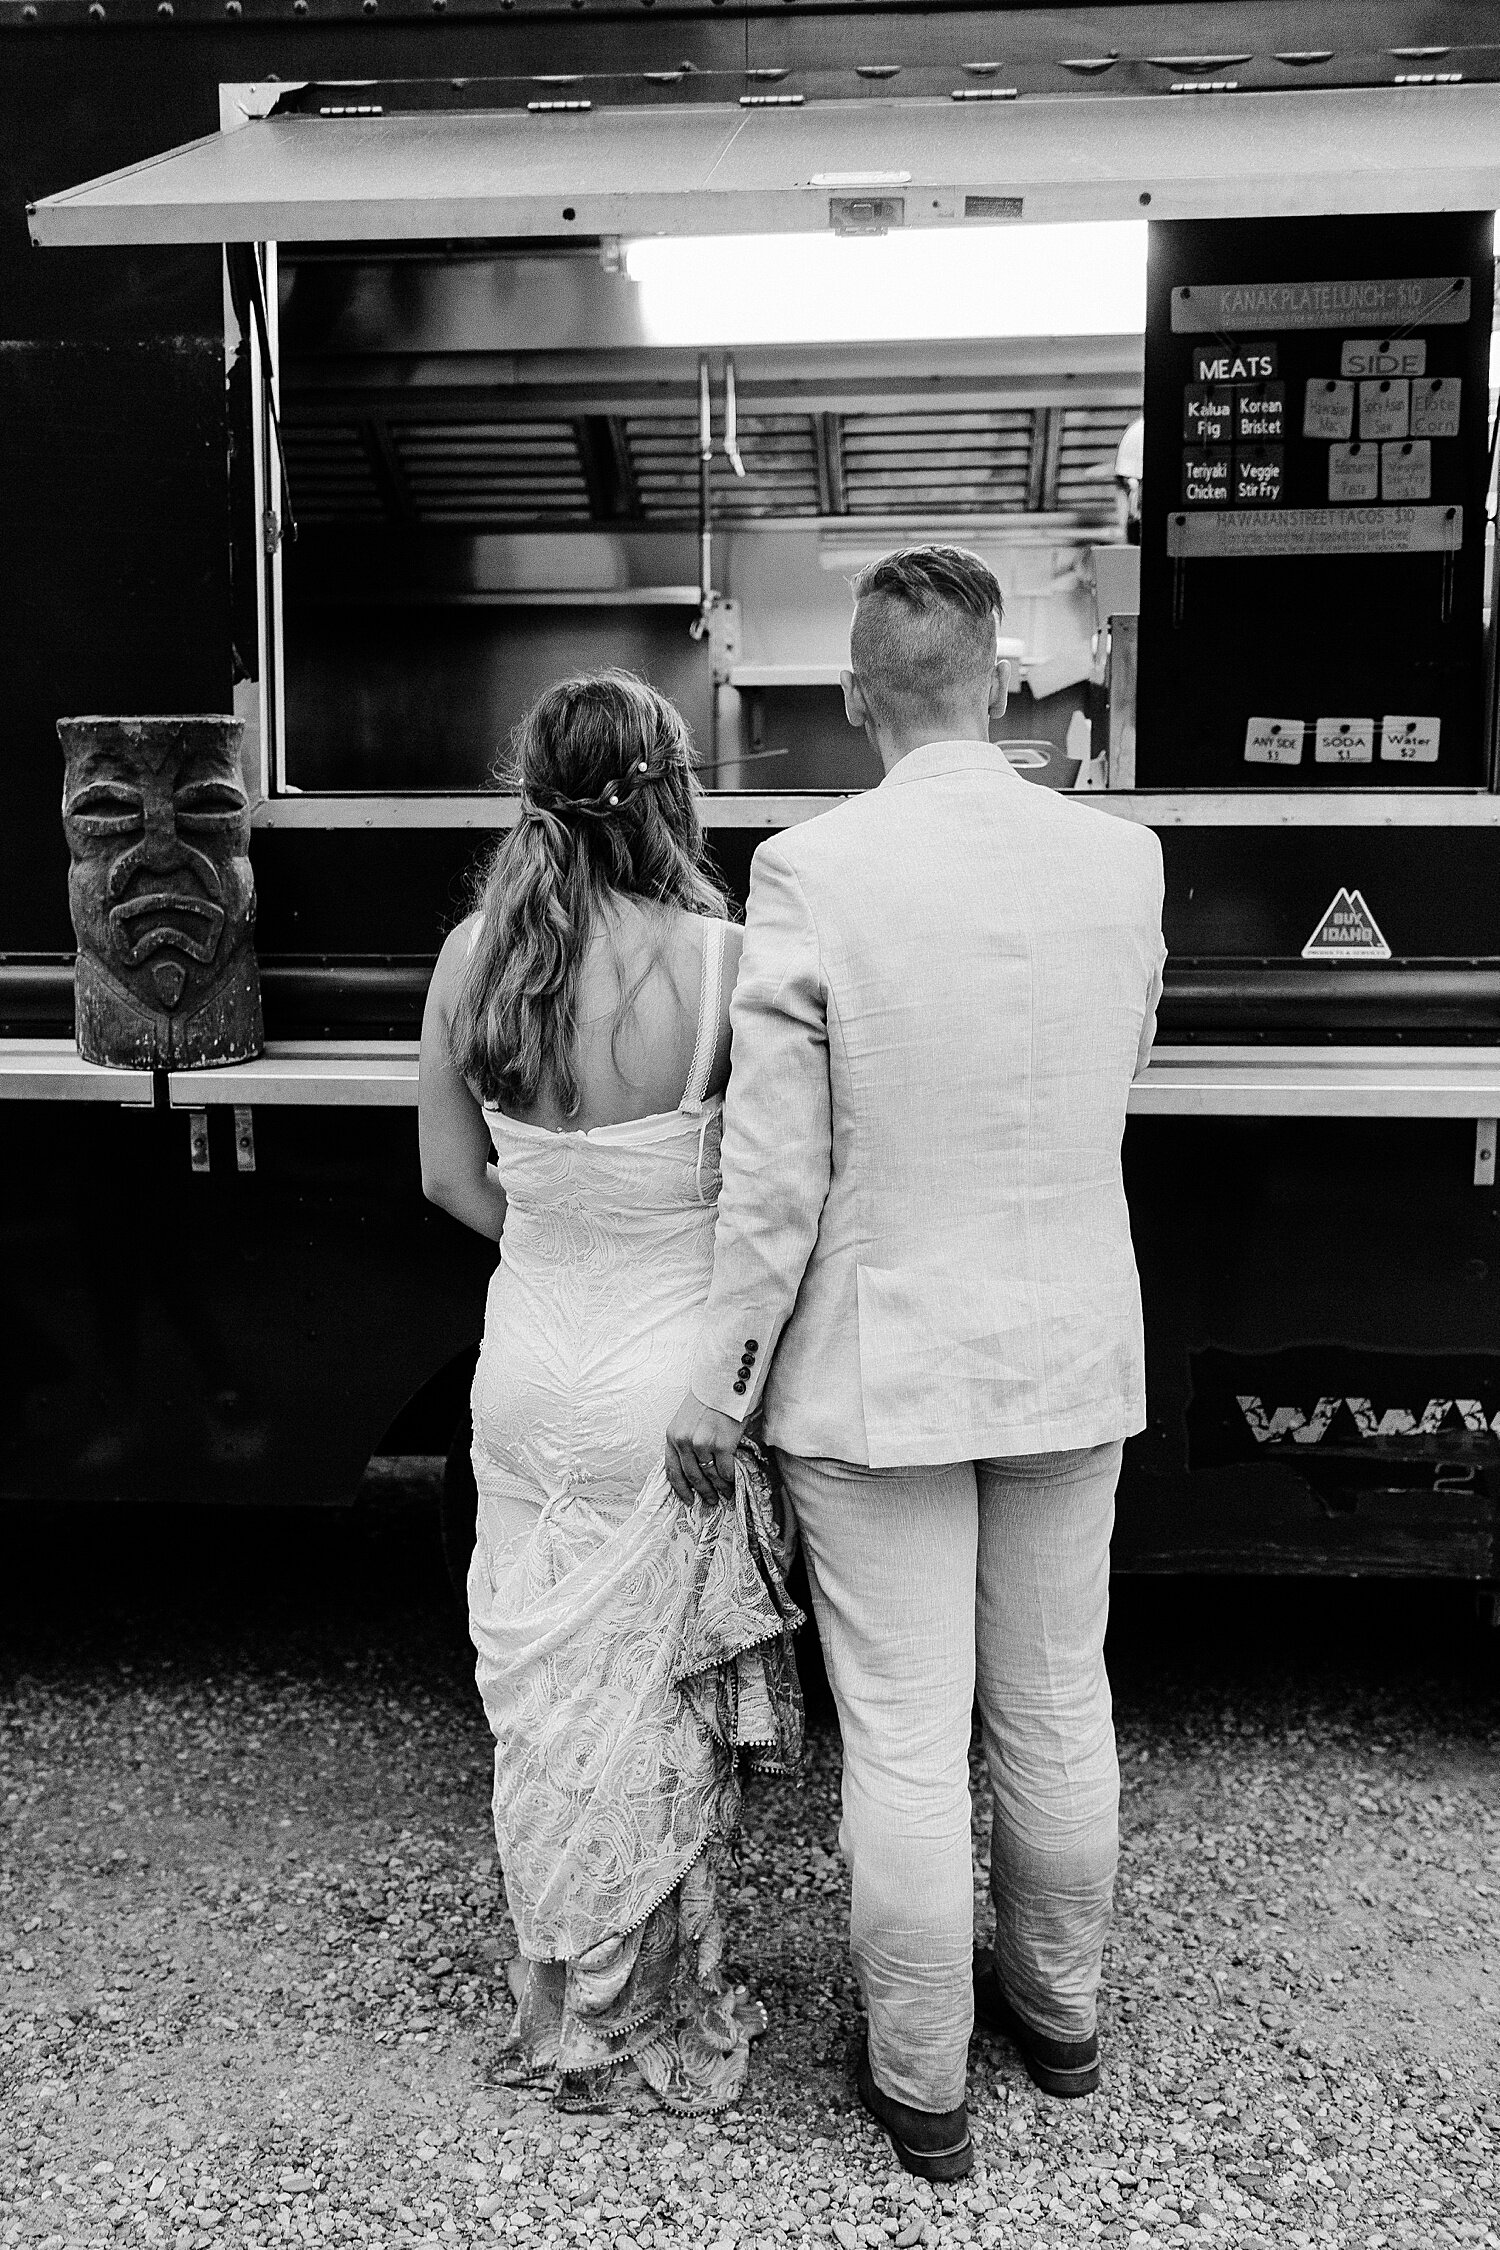 Food truck at a wedding